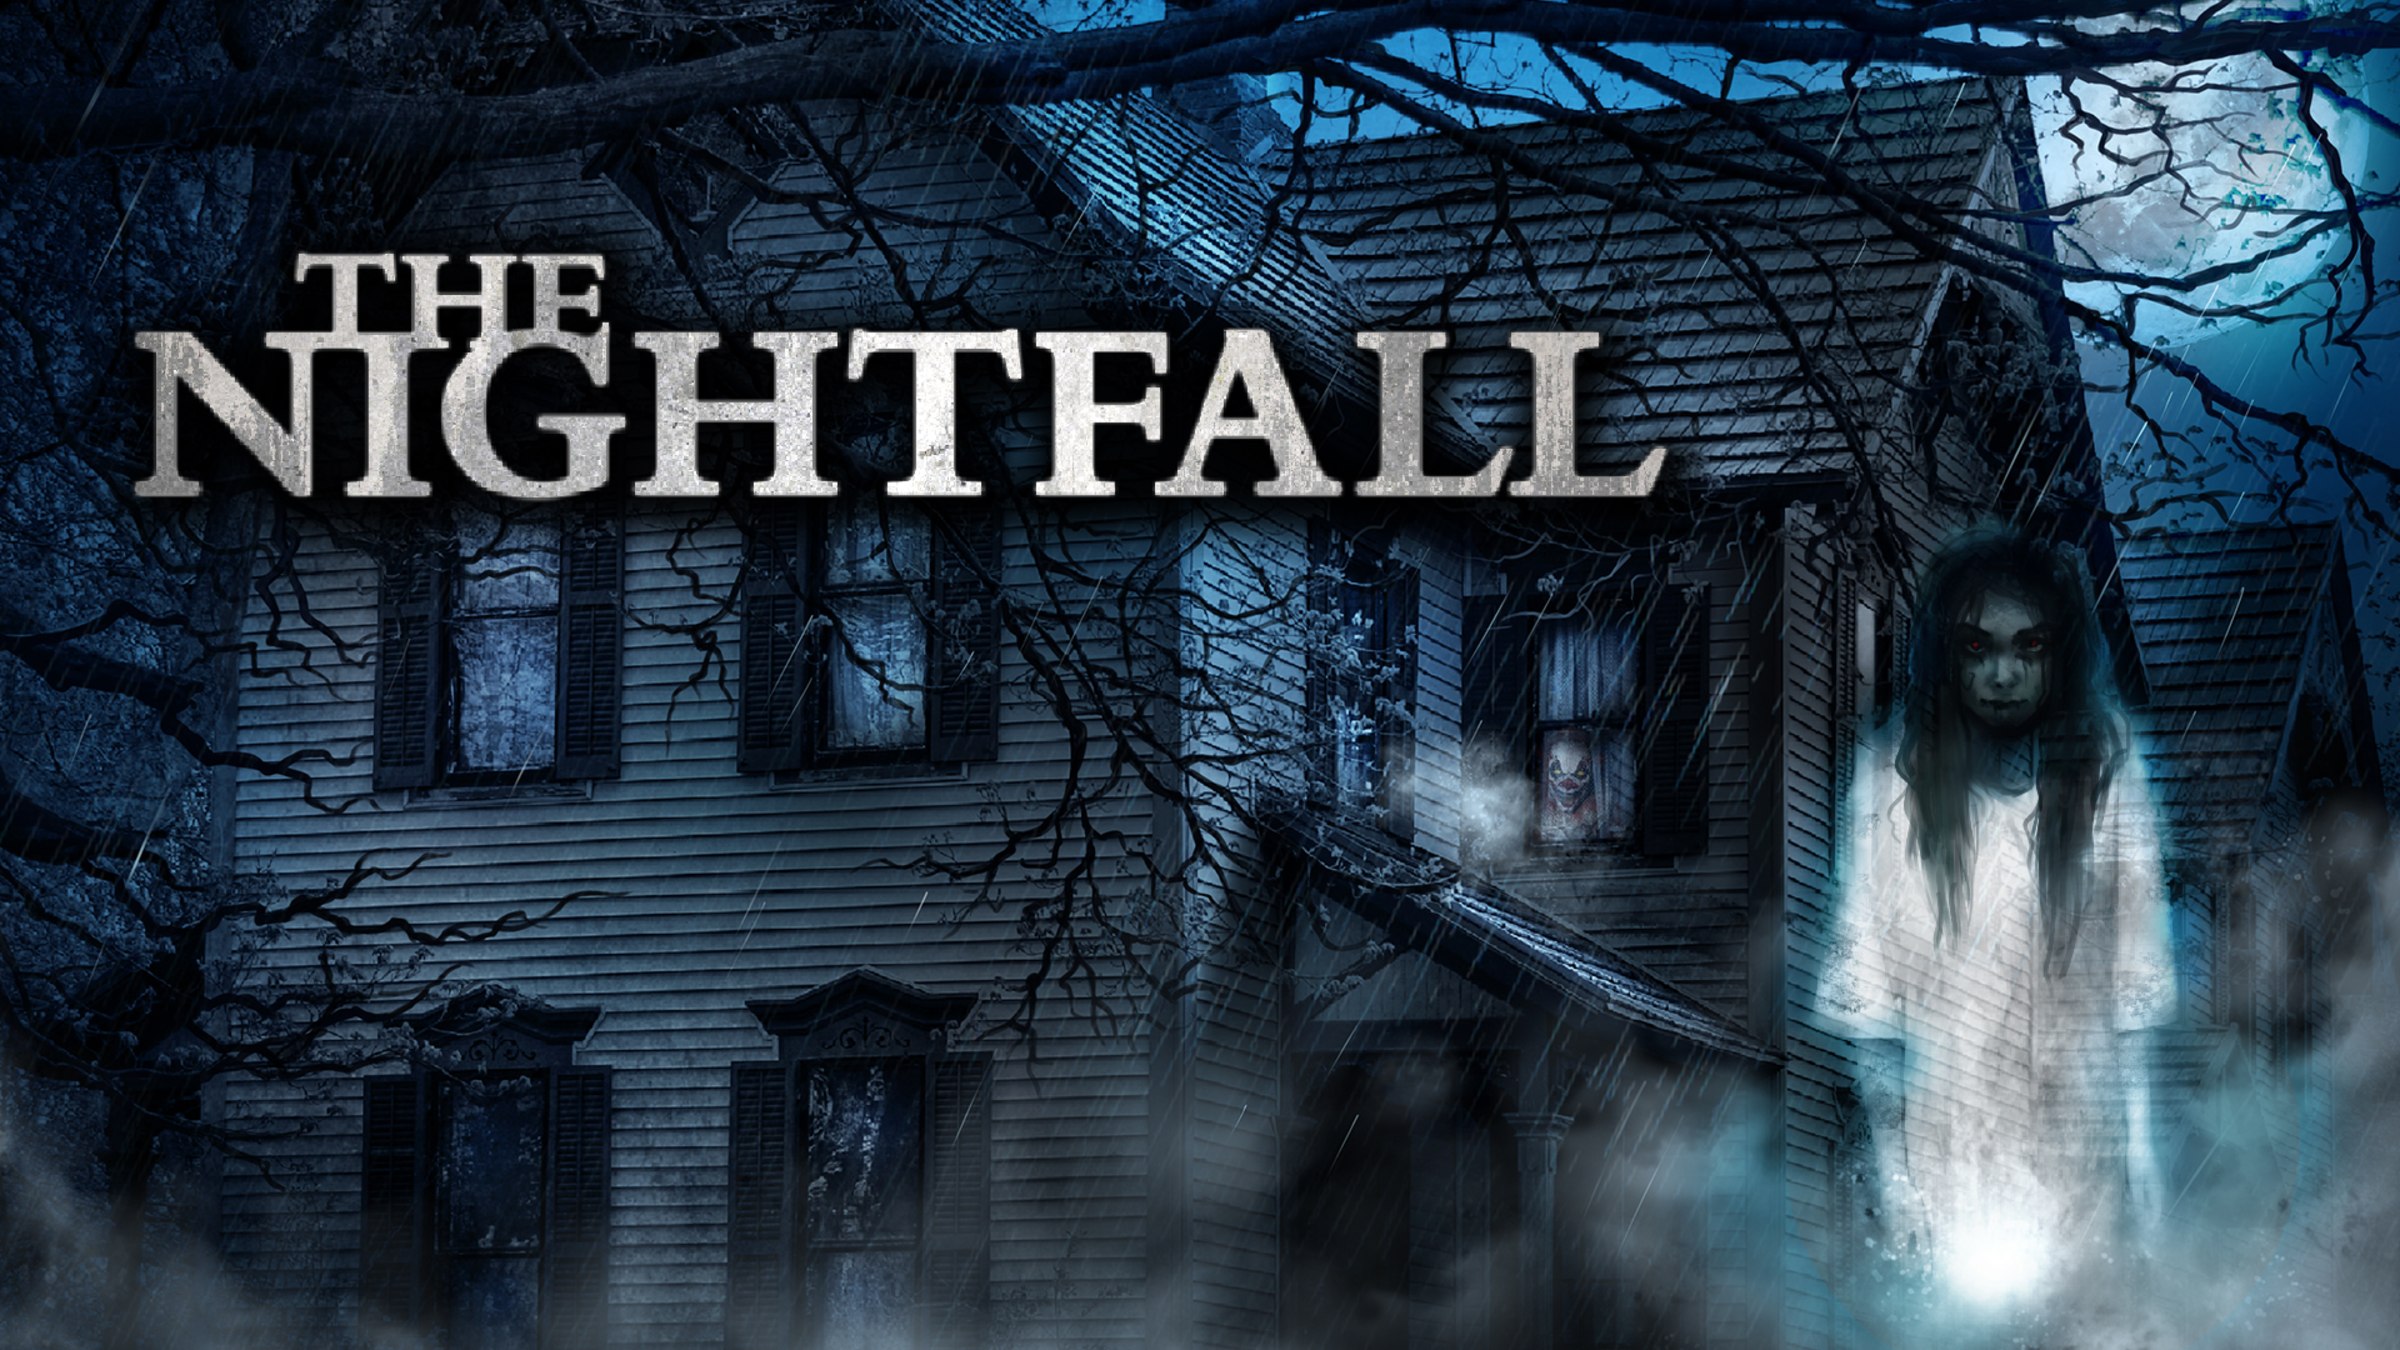 Fear nightfall 1.20 1. Nightfall. Pineview Drive 2 the Nightfall. The Nightfall 2018.